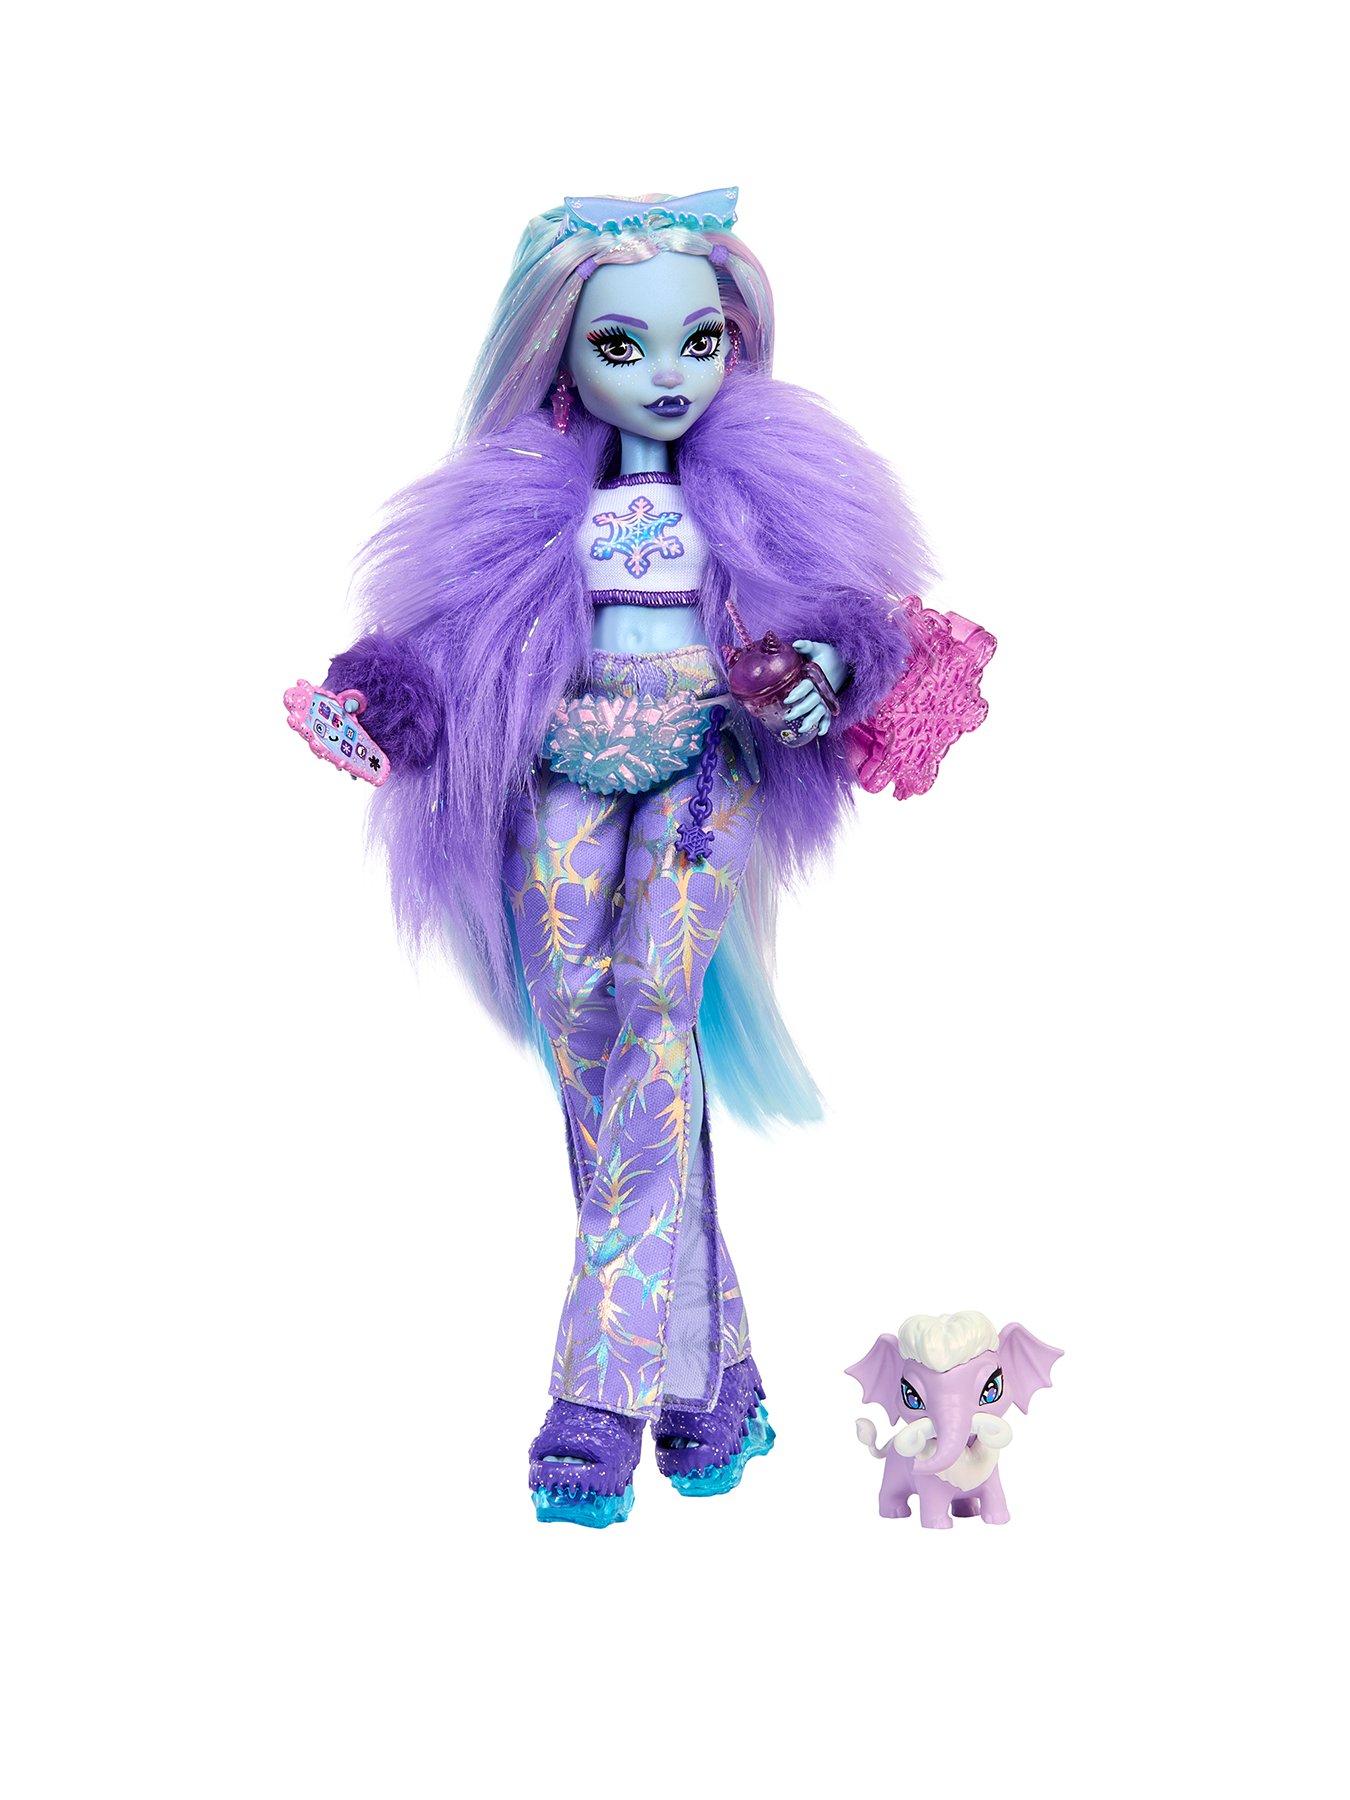 HUGE Original Monster High Doll & Accessory Lot 